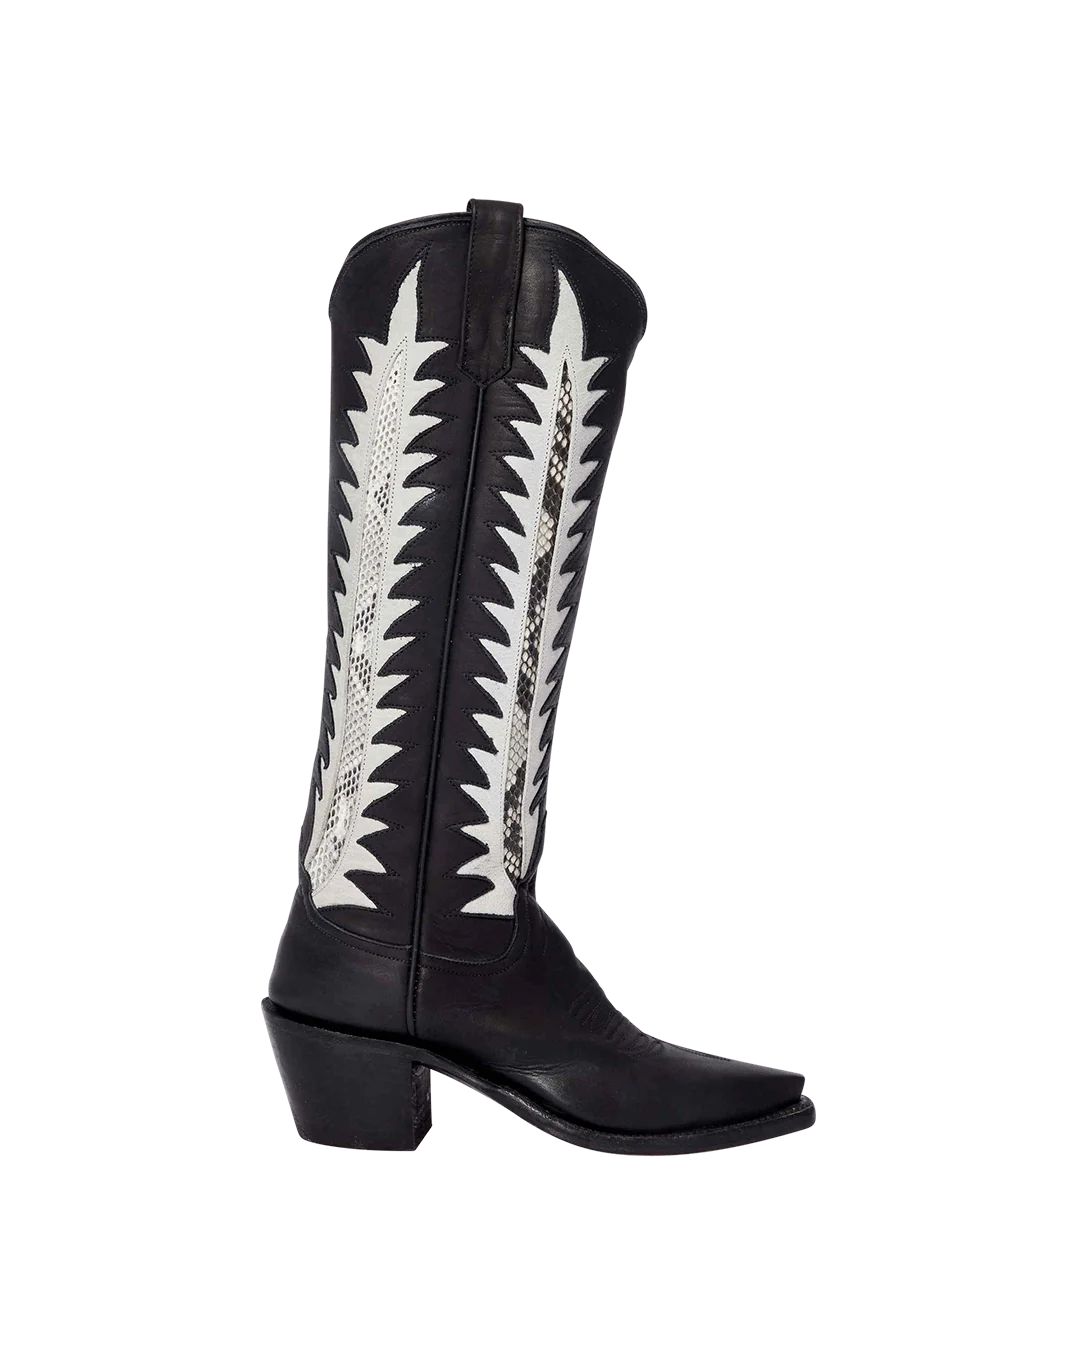 Kate Black | Luxury Fashion Women's Cowboy Boots | Miron Crosby | Miron Crosby